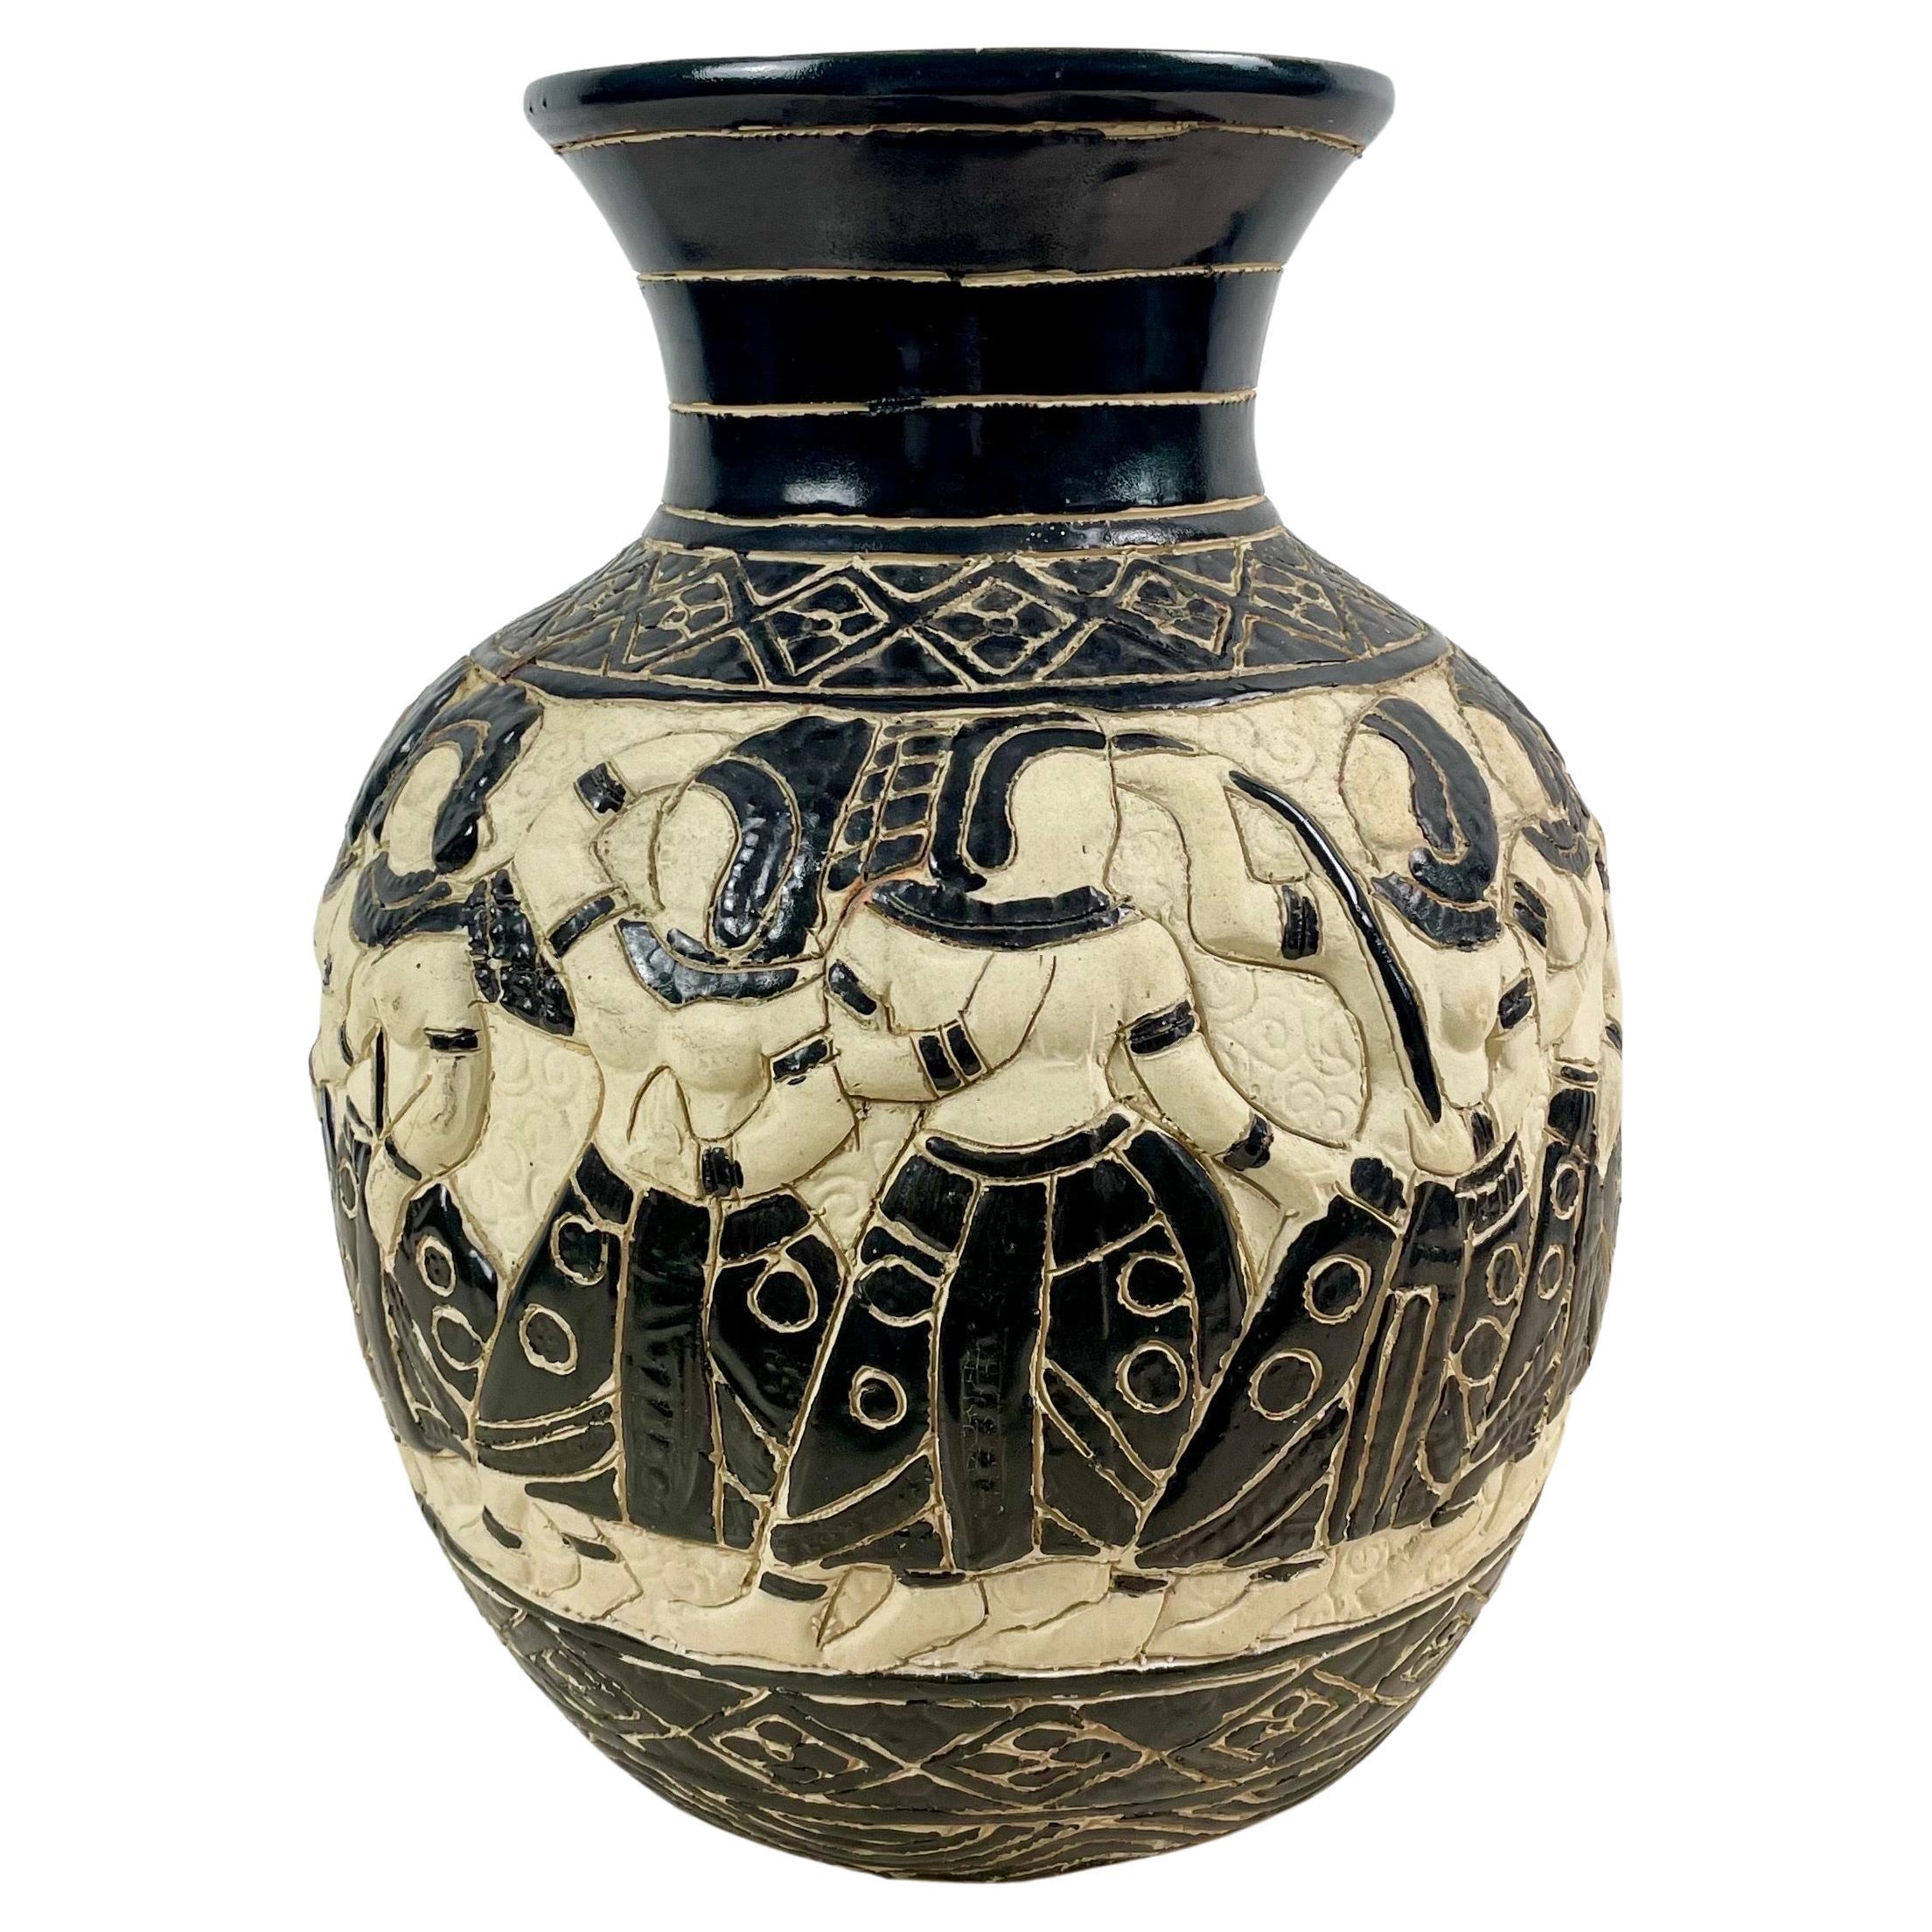 Large Vietnamese Bien-Hoa black ceramic vase decorated with dancers - circa 1930